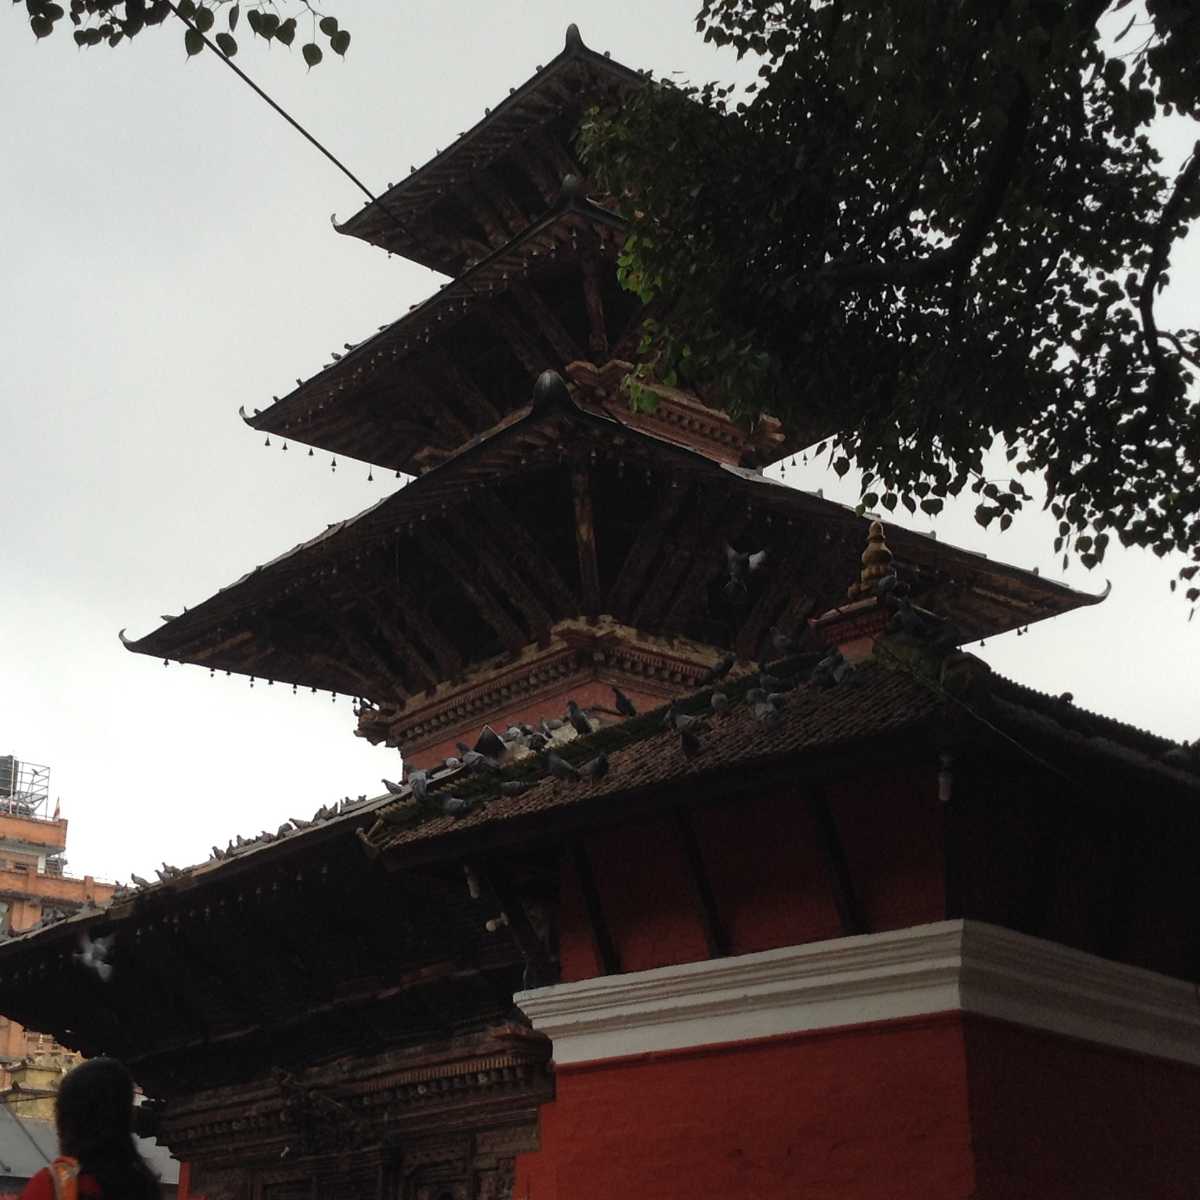 The Kumbeshwar Temple.